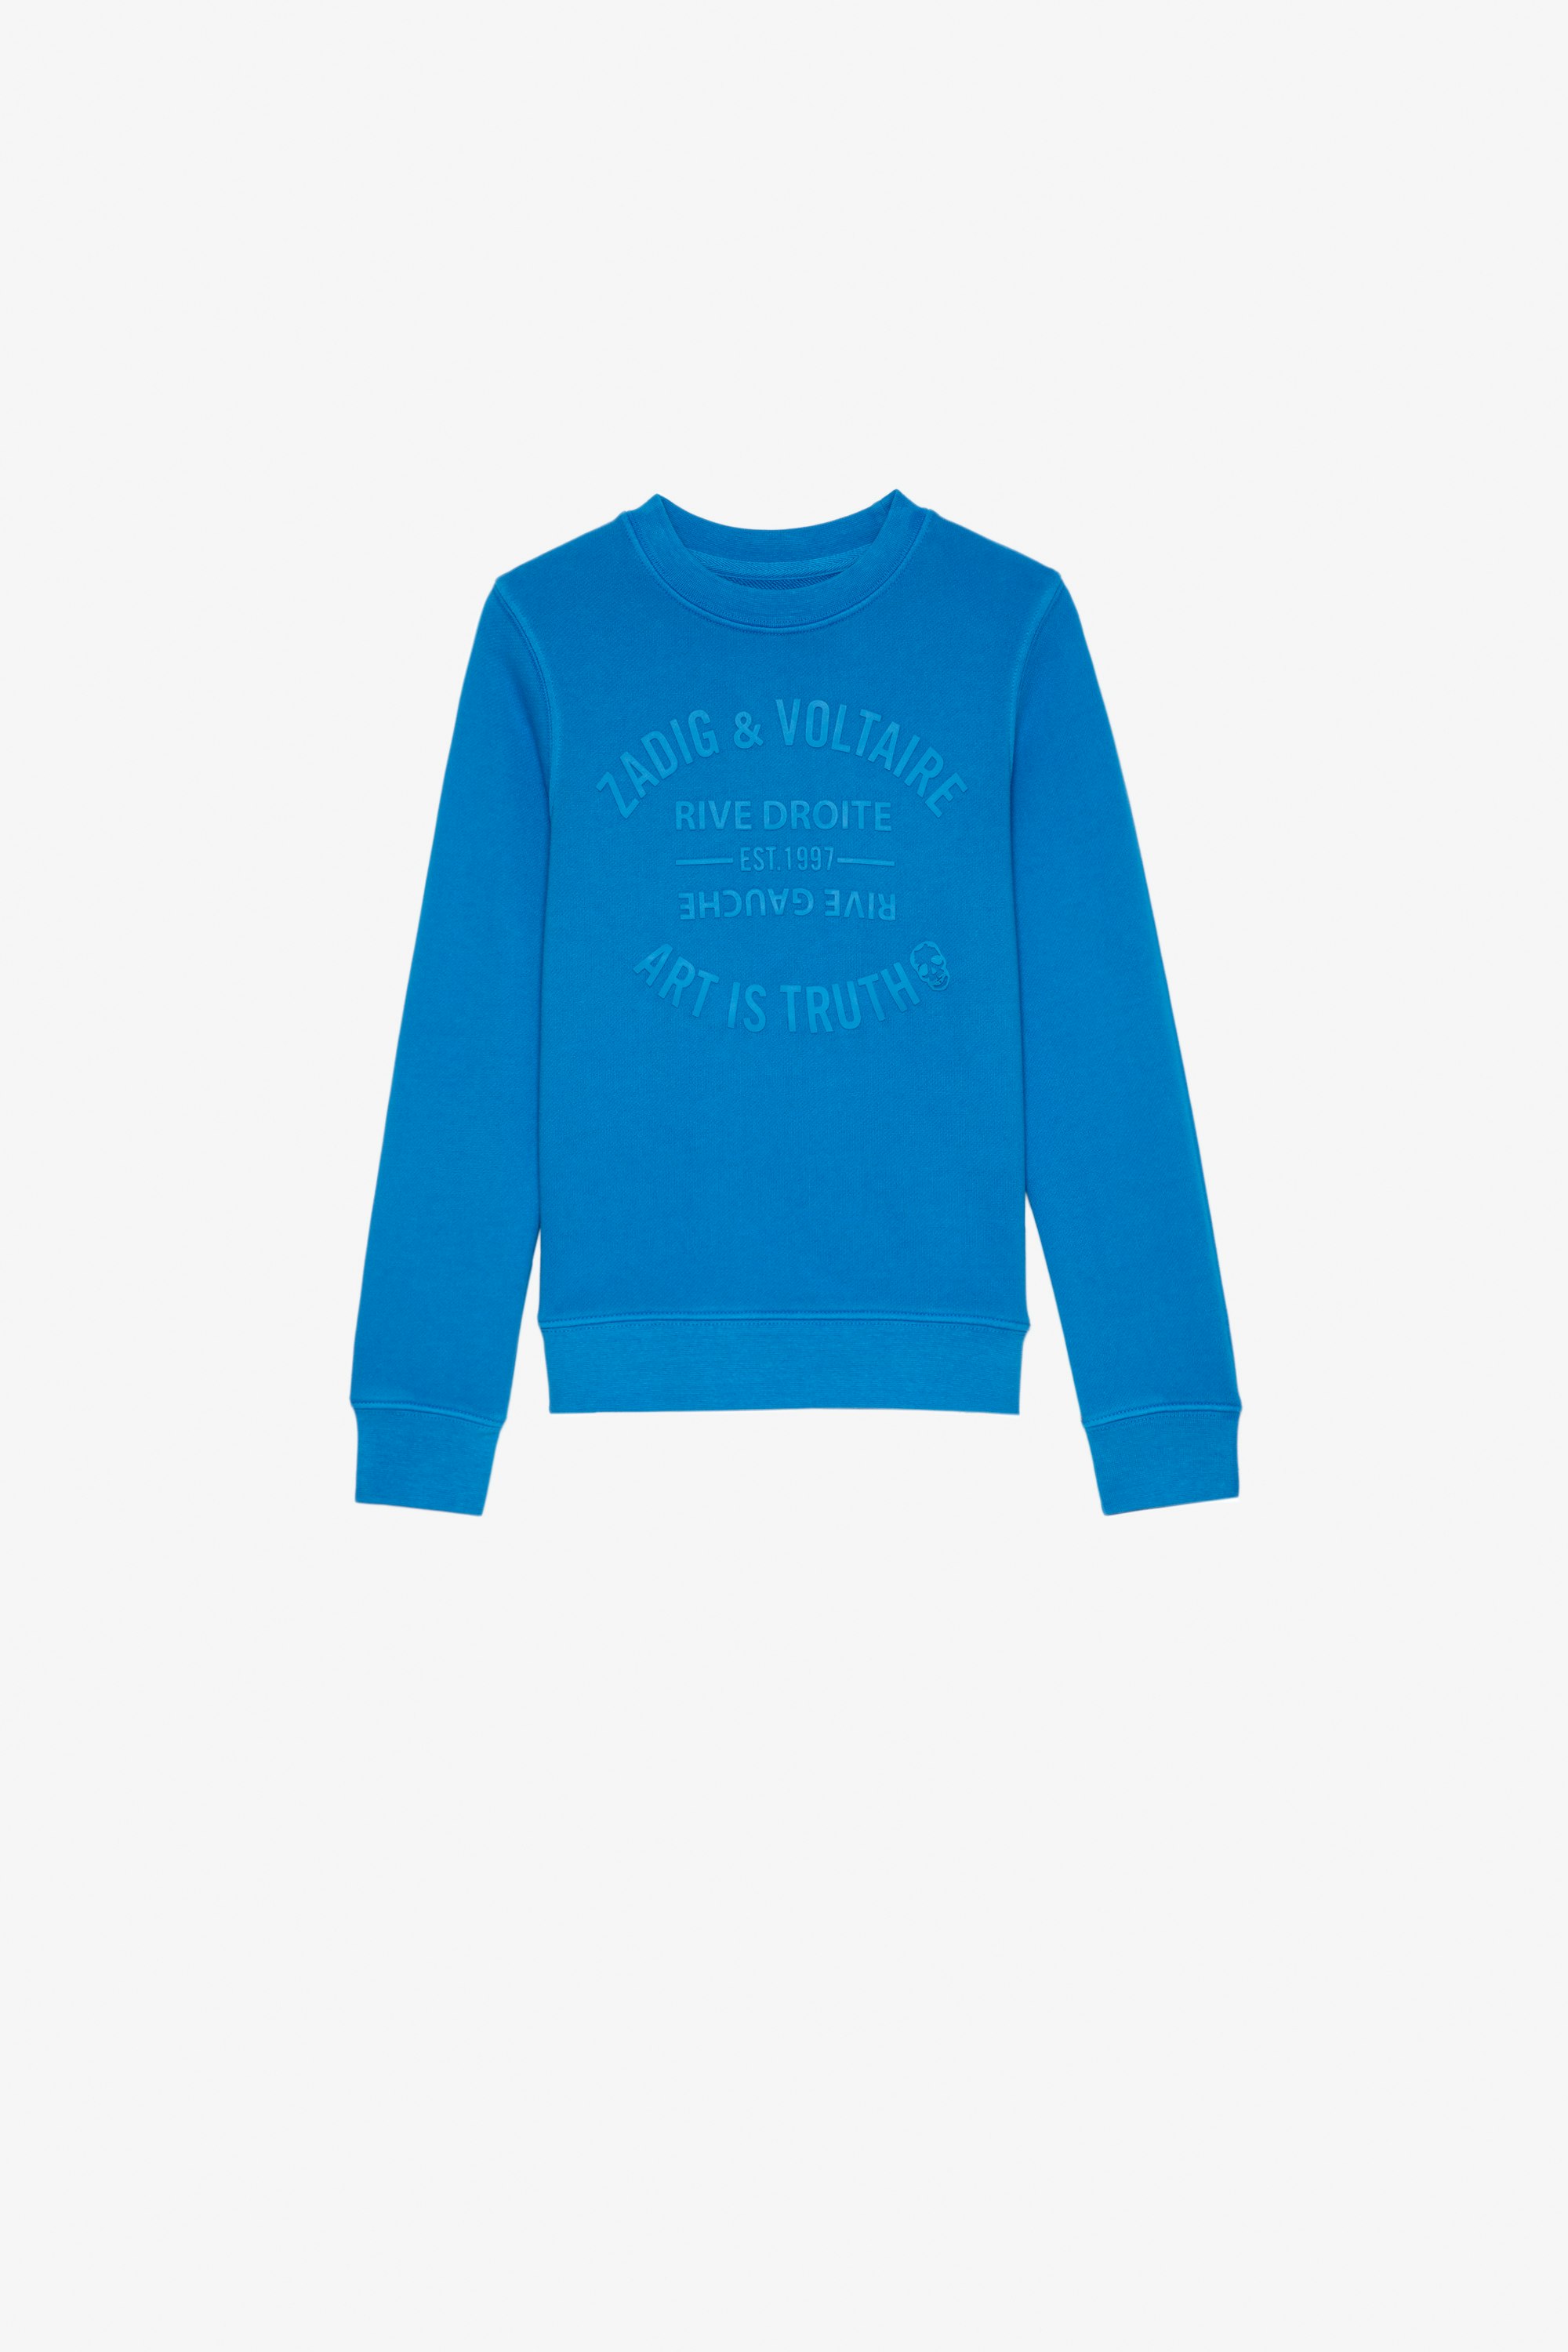 Simba Kids' Sweatshirt Kids’ blue cotton sweatshirt featuring an embroidered Core Cho motif and the brand insignia